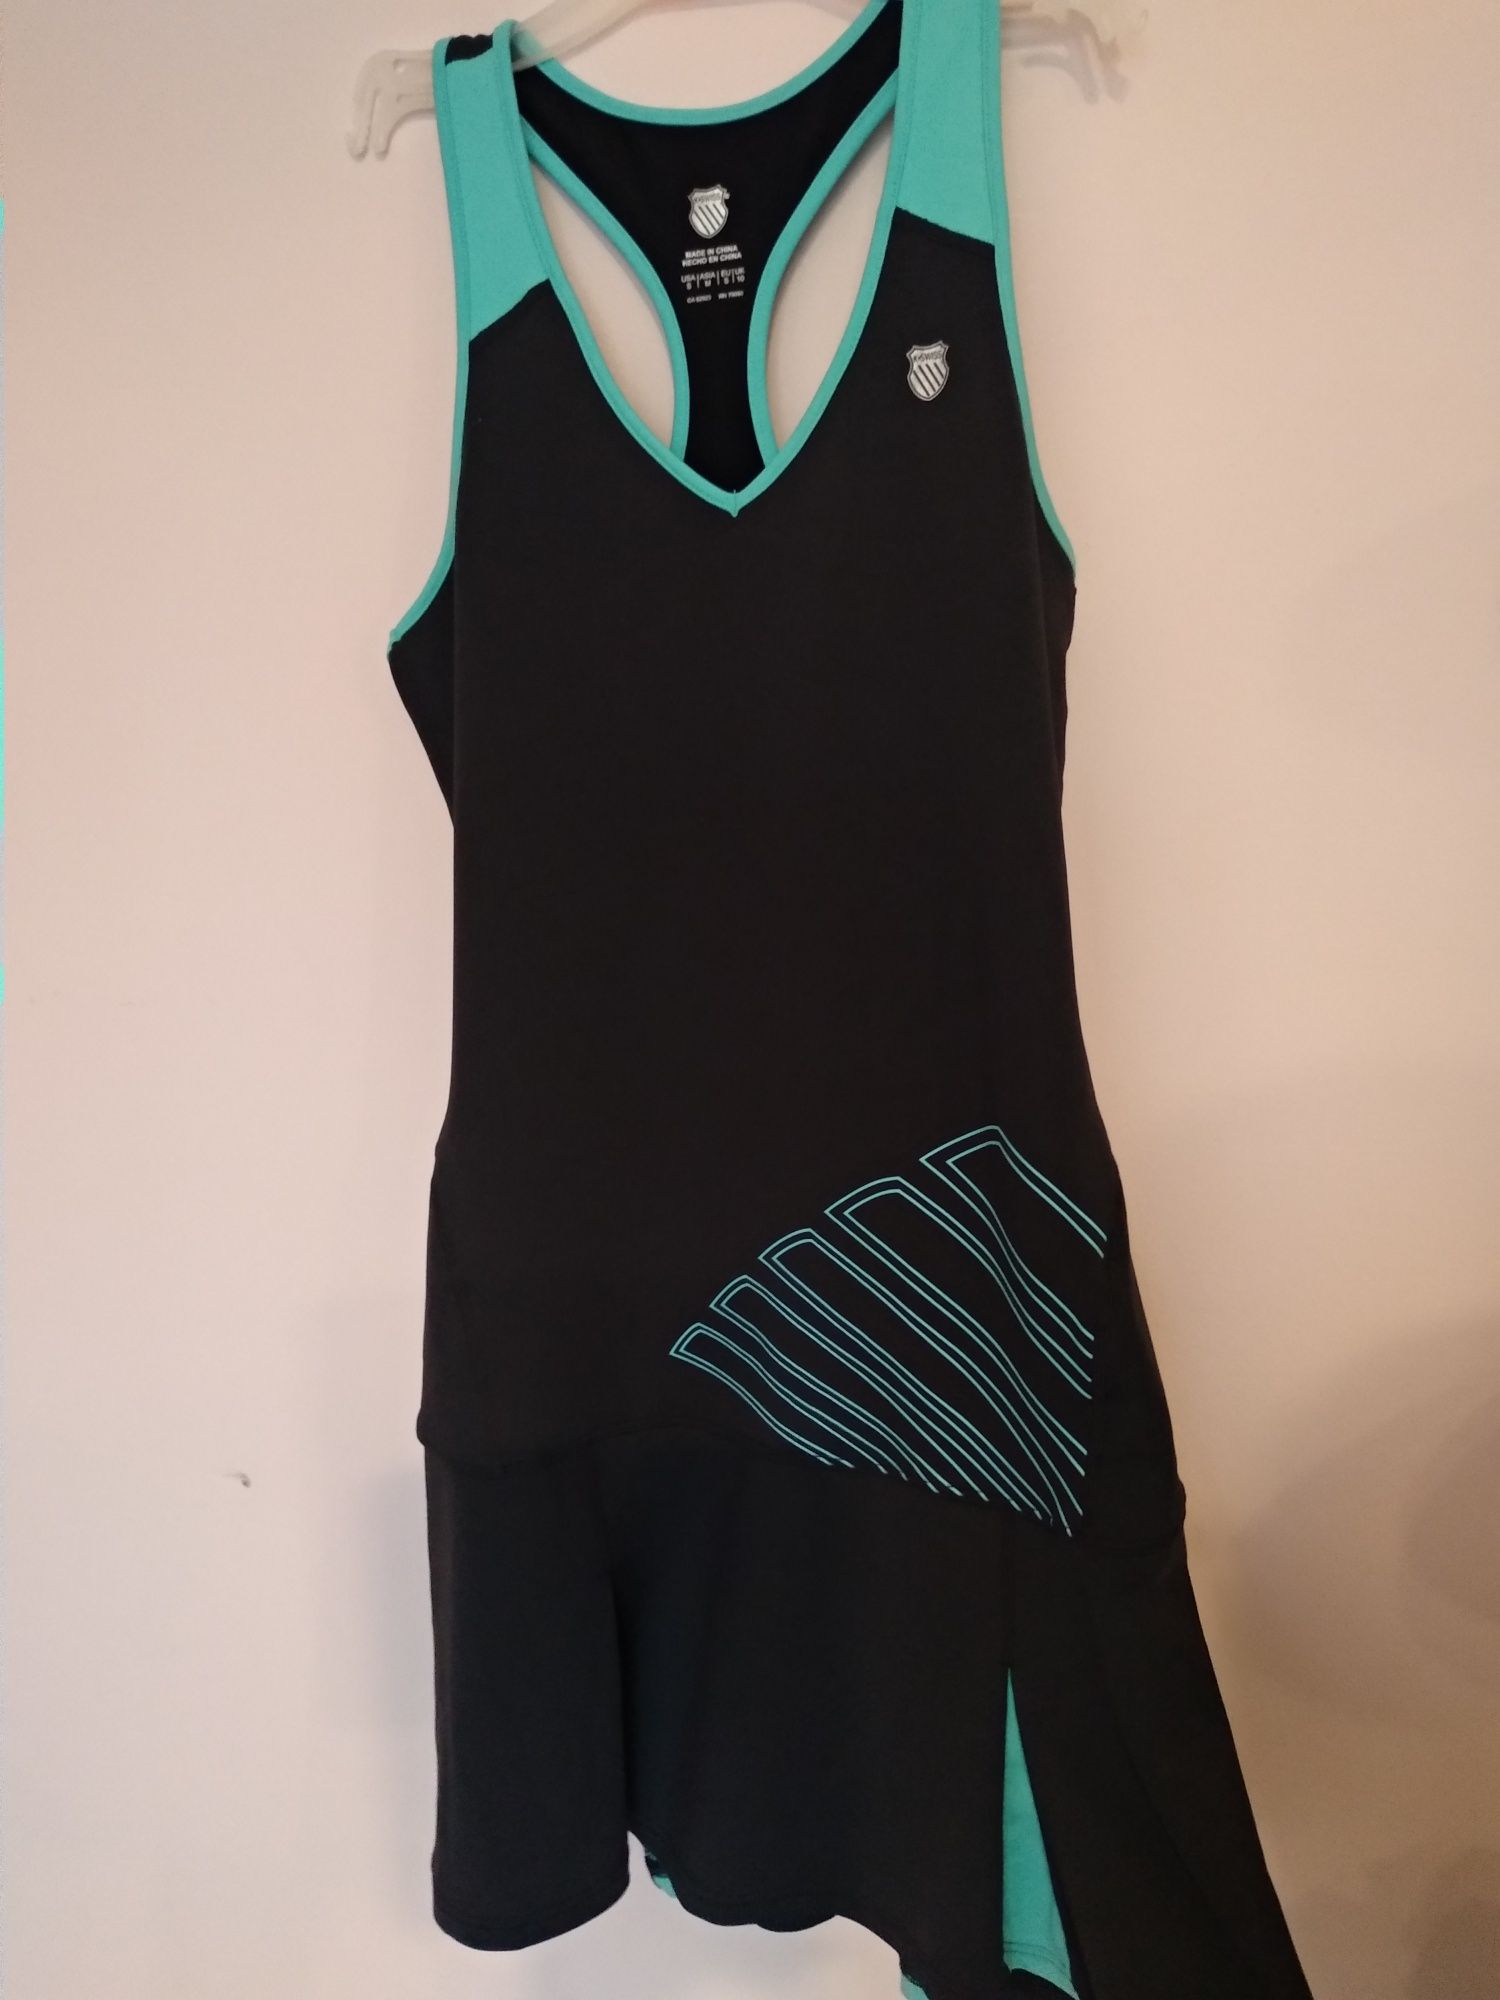 Фирменный спорт платье  Р 46. Для занятий  спорт танцами и Kangoo Jump